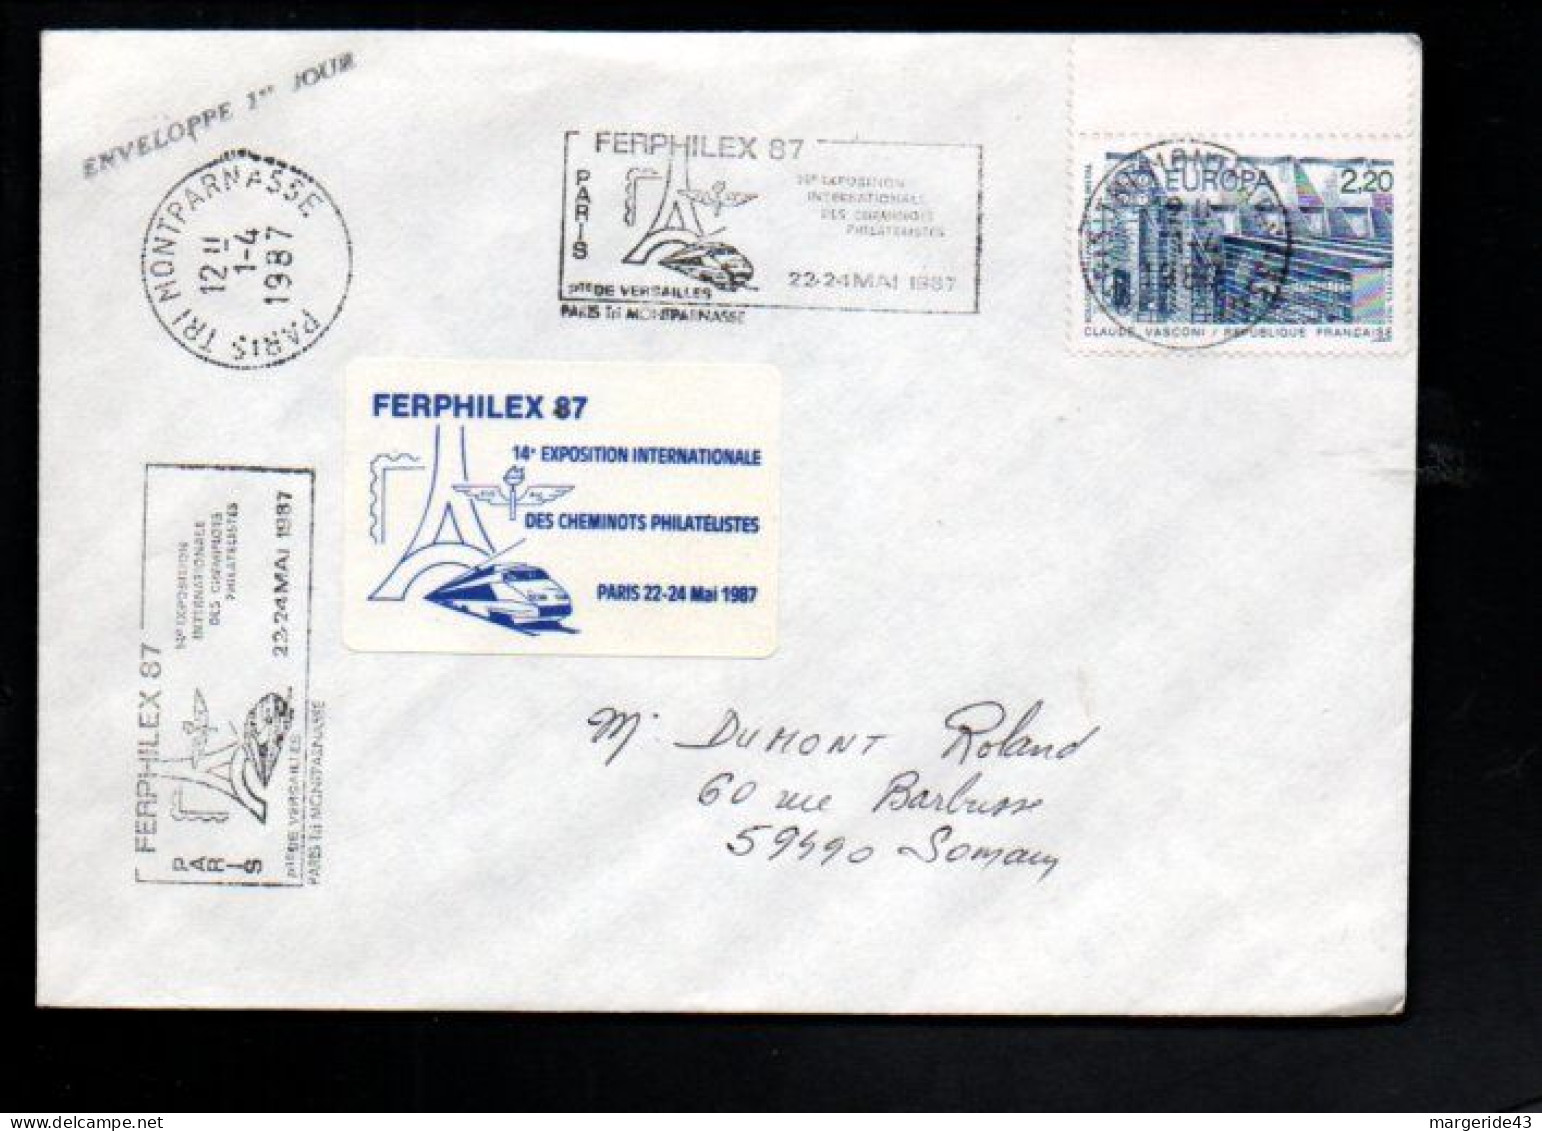 EXPO INTERNATIONALE FERPHILEX PARIS 1987 - Commemorative Postmarks